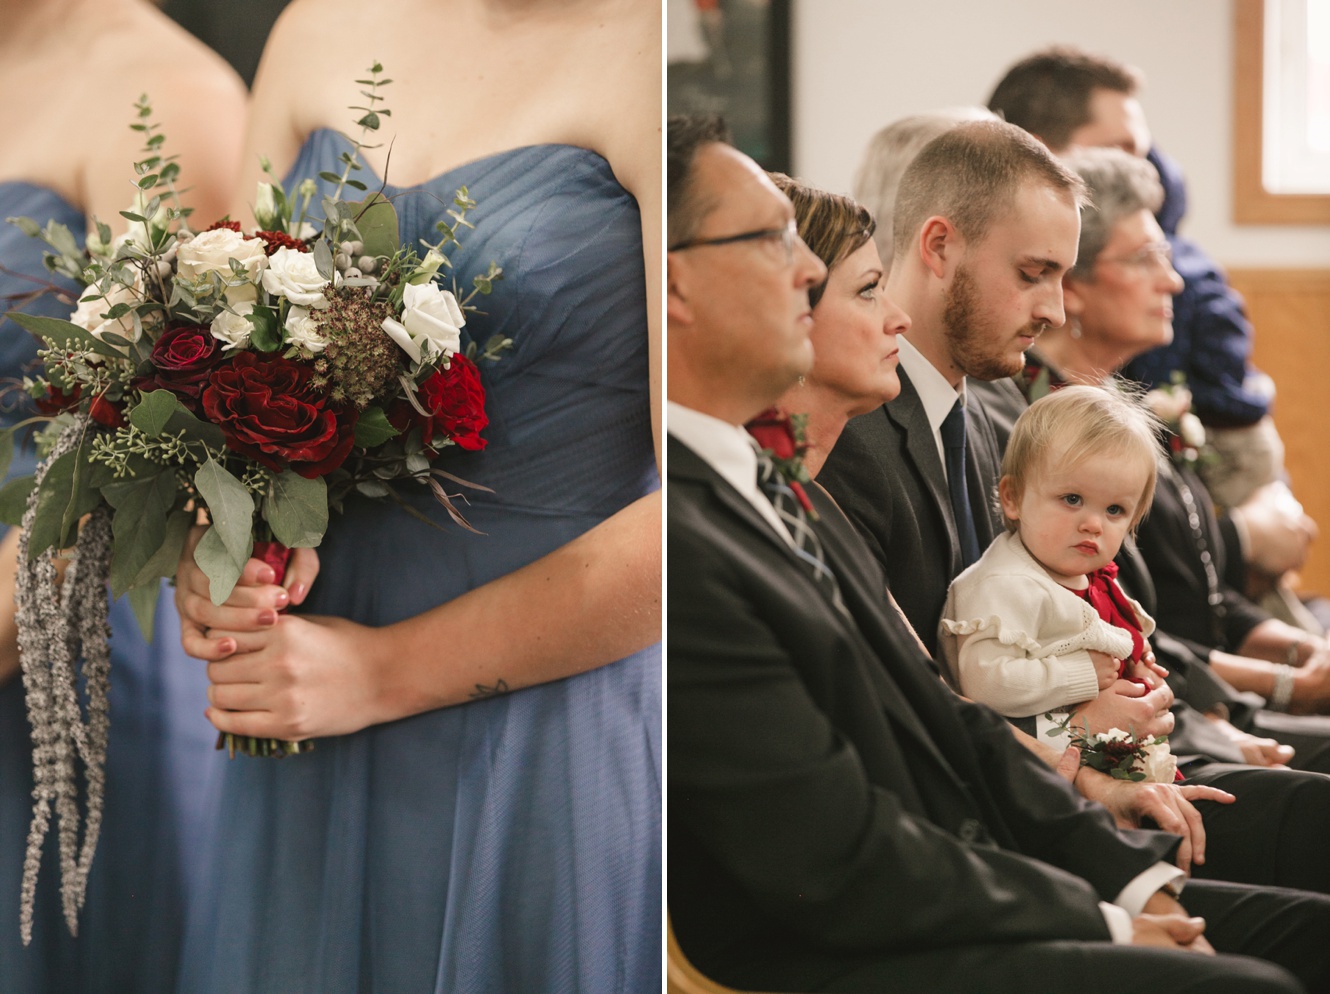 How to take amazing wedding ceremony photos